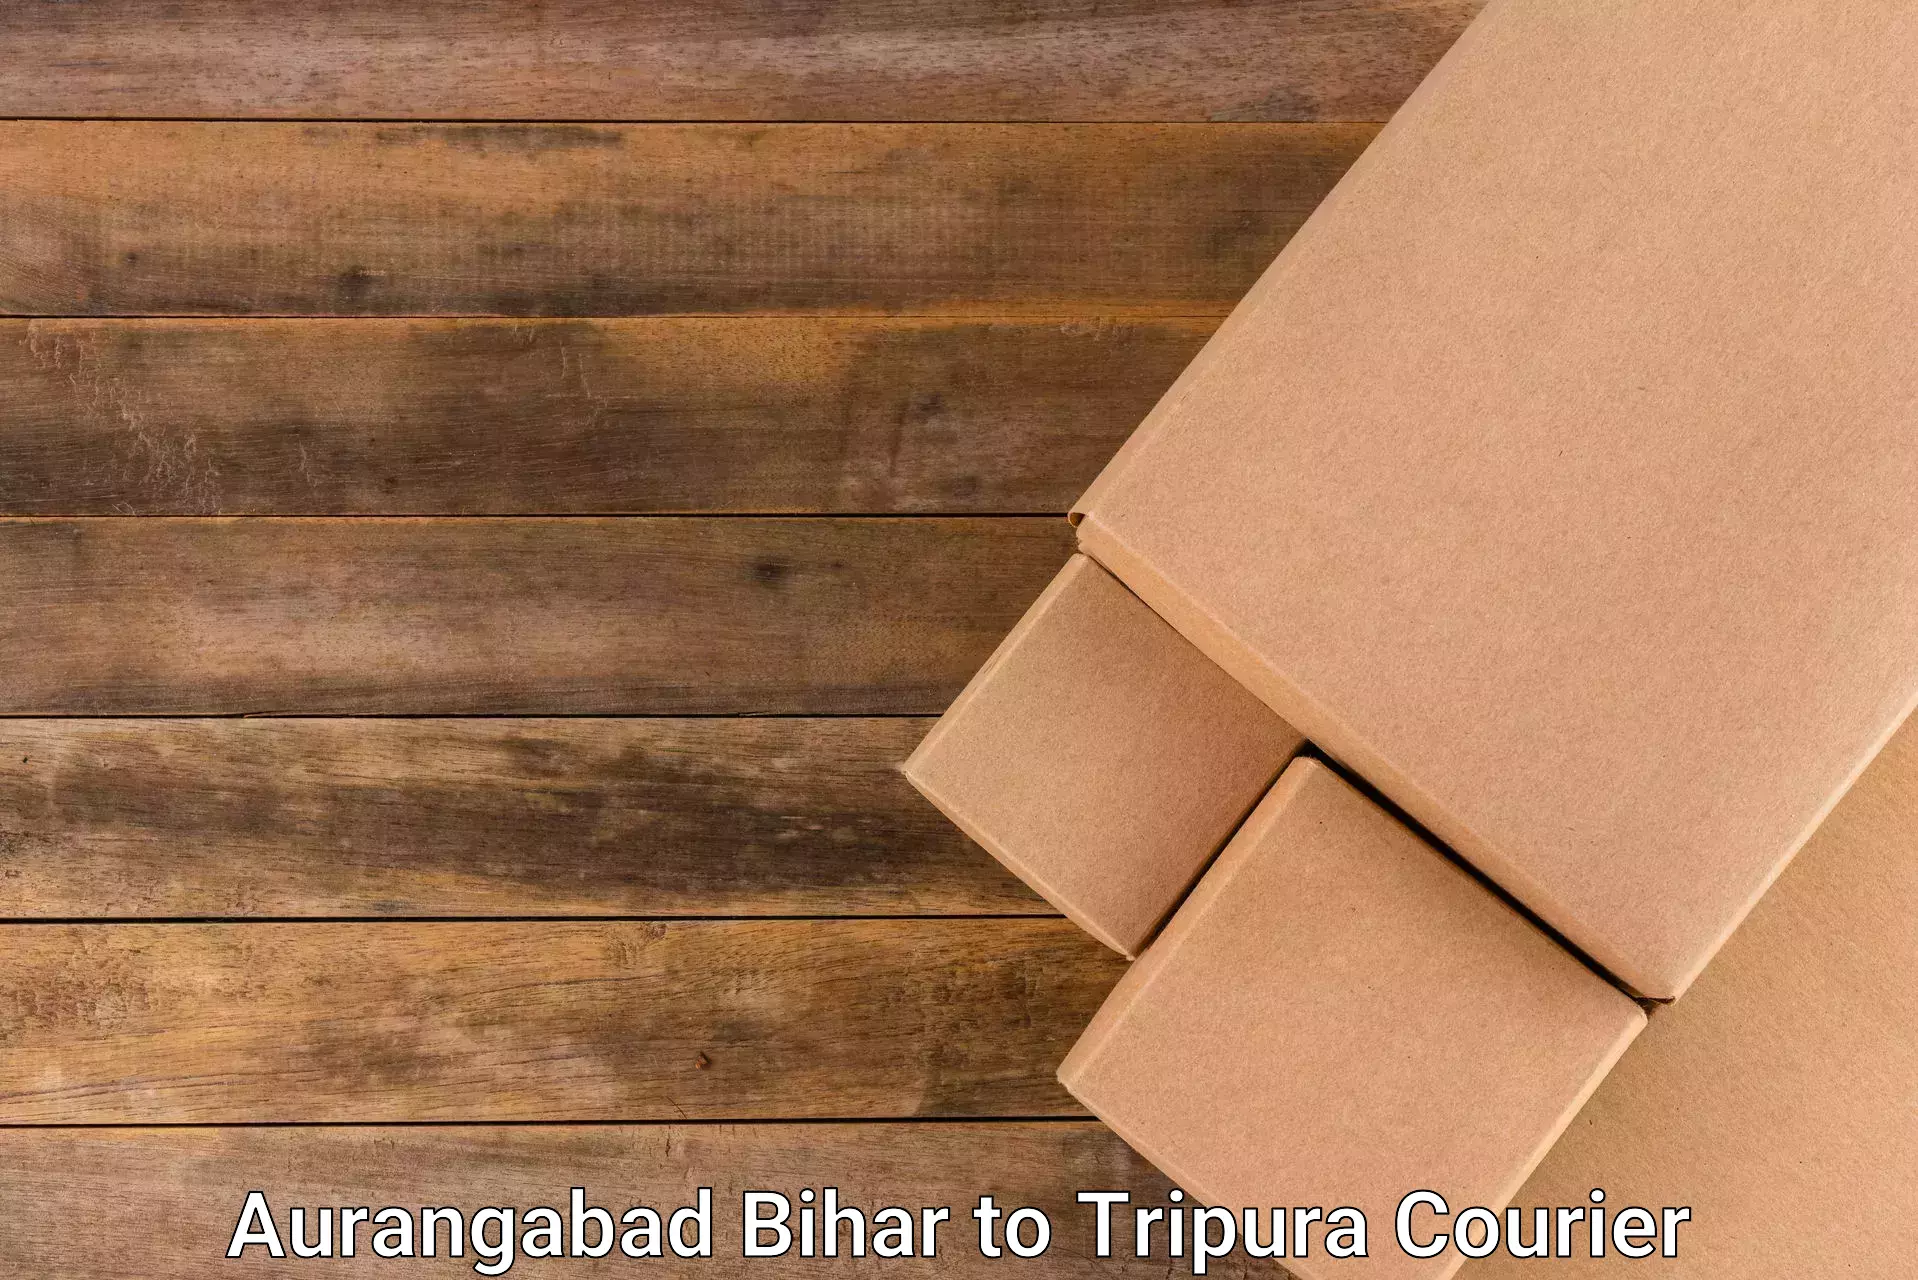 Overnight delivery services Aurangabad Bihar to West Tripura